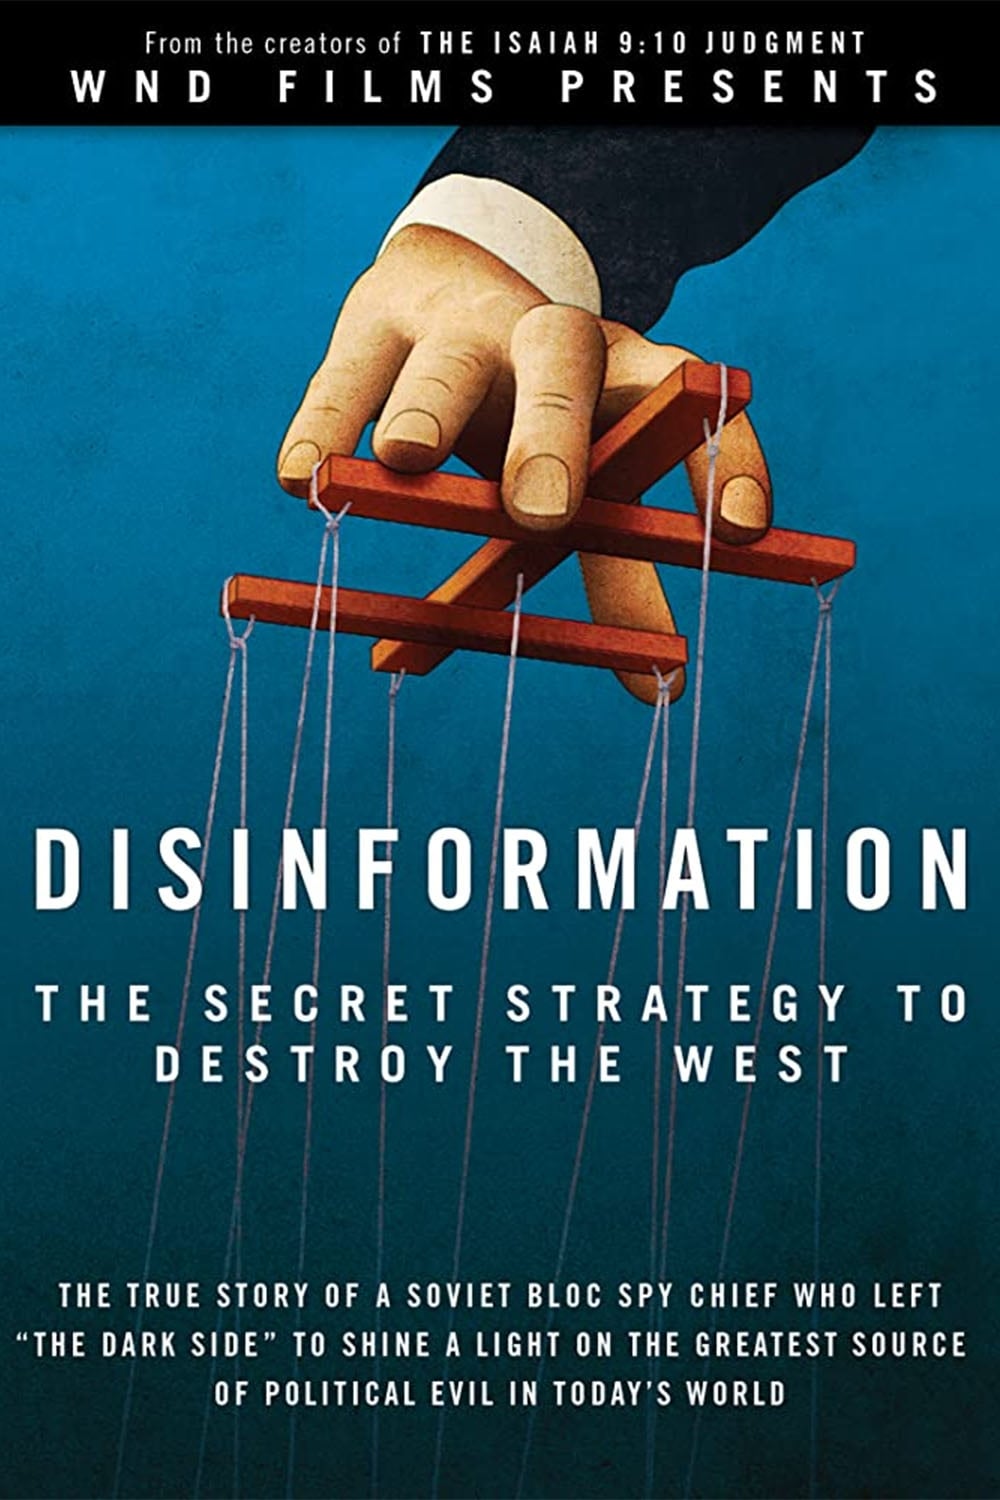 Disinformation (2013)